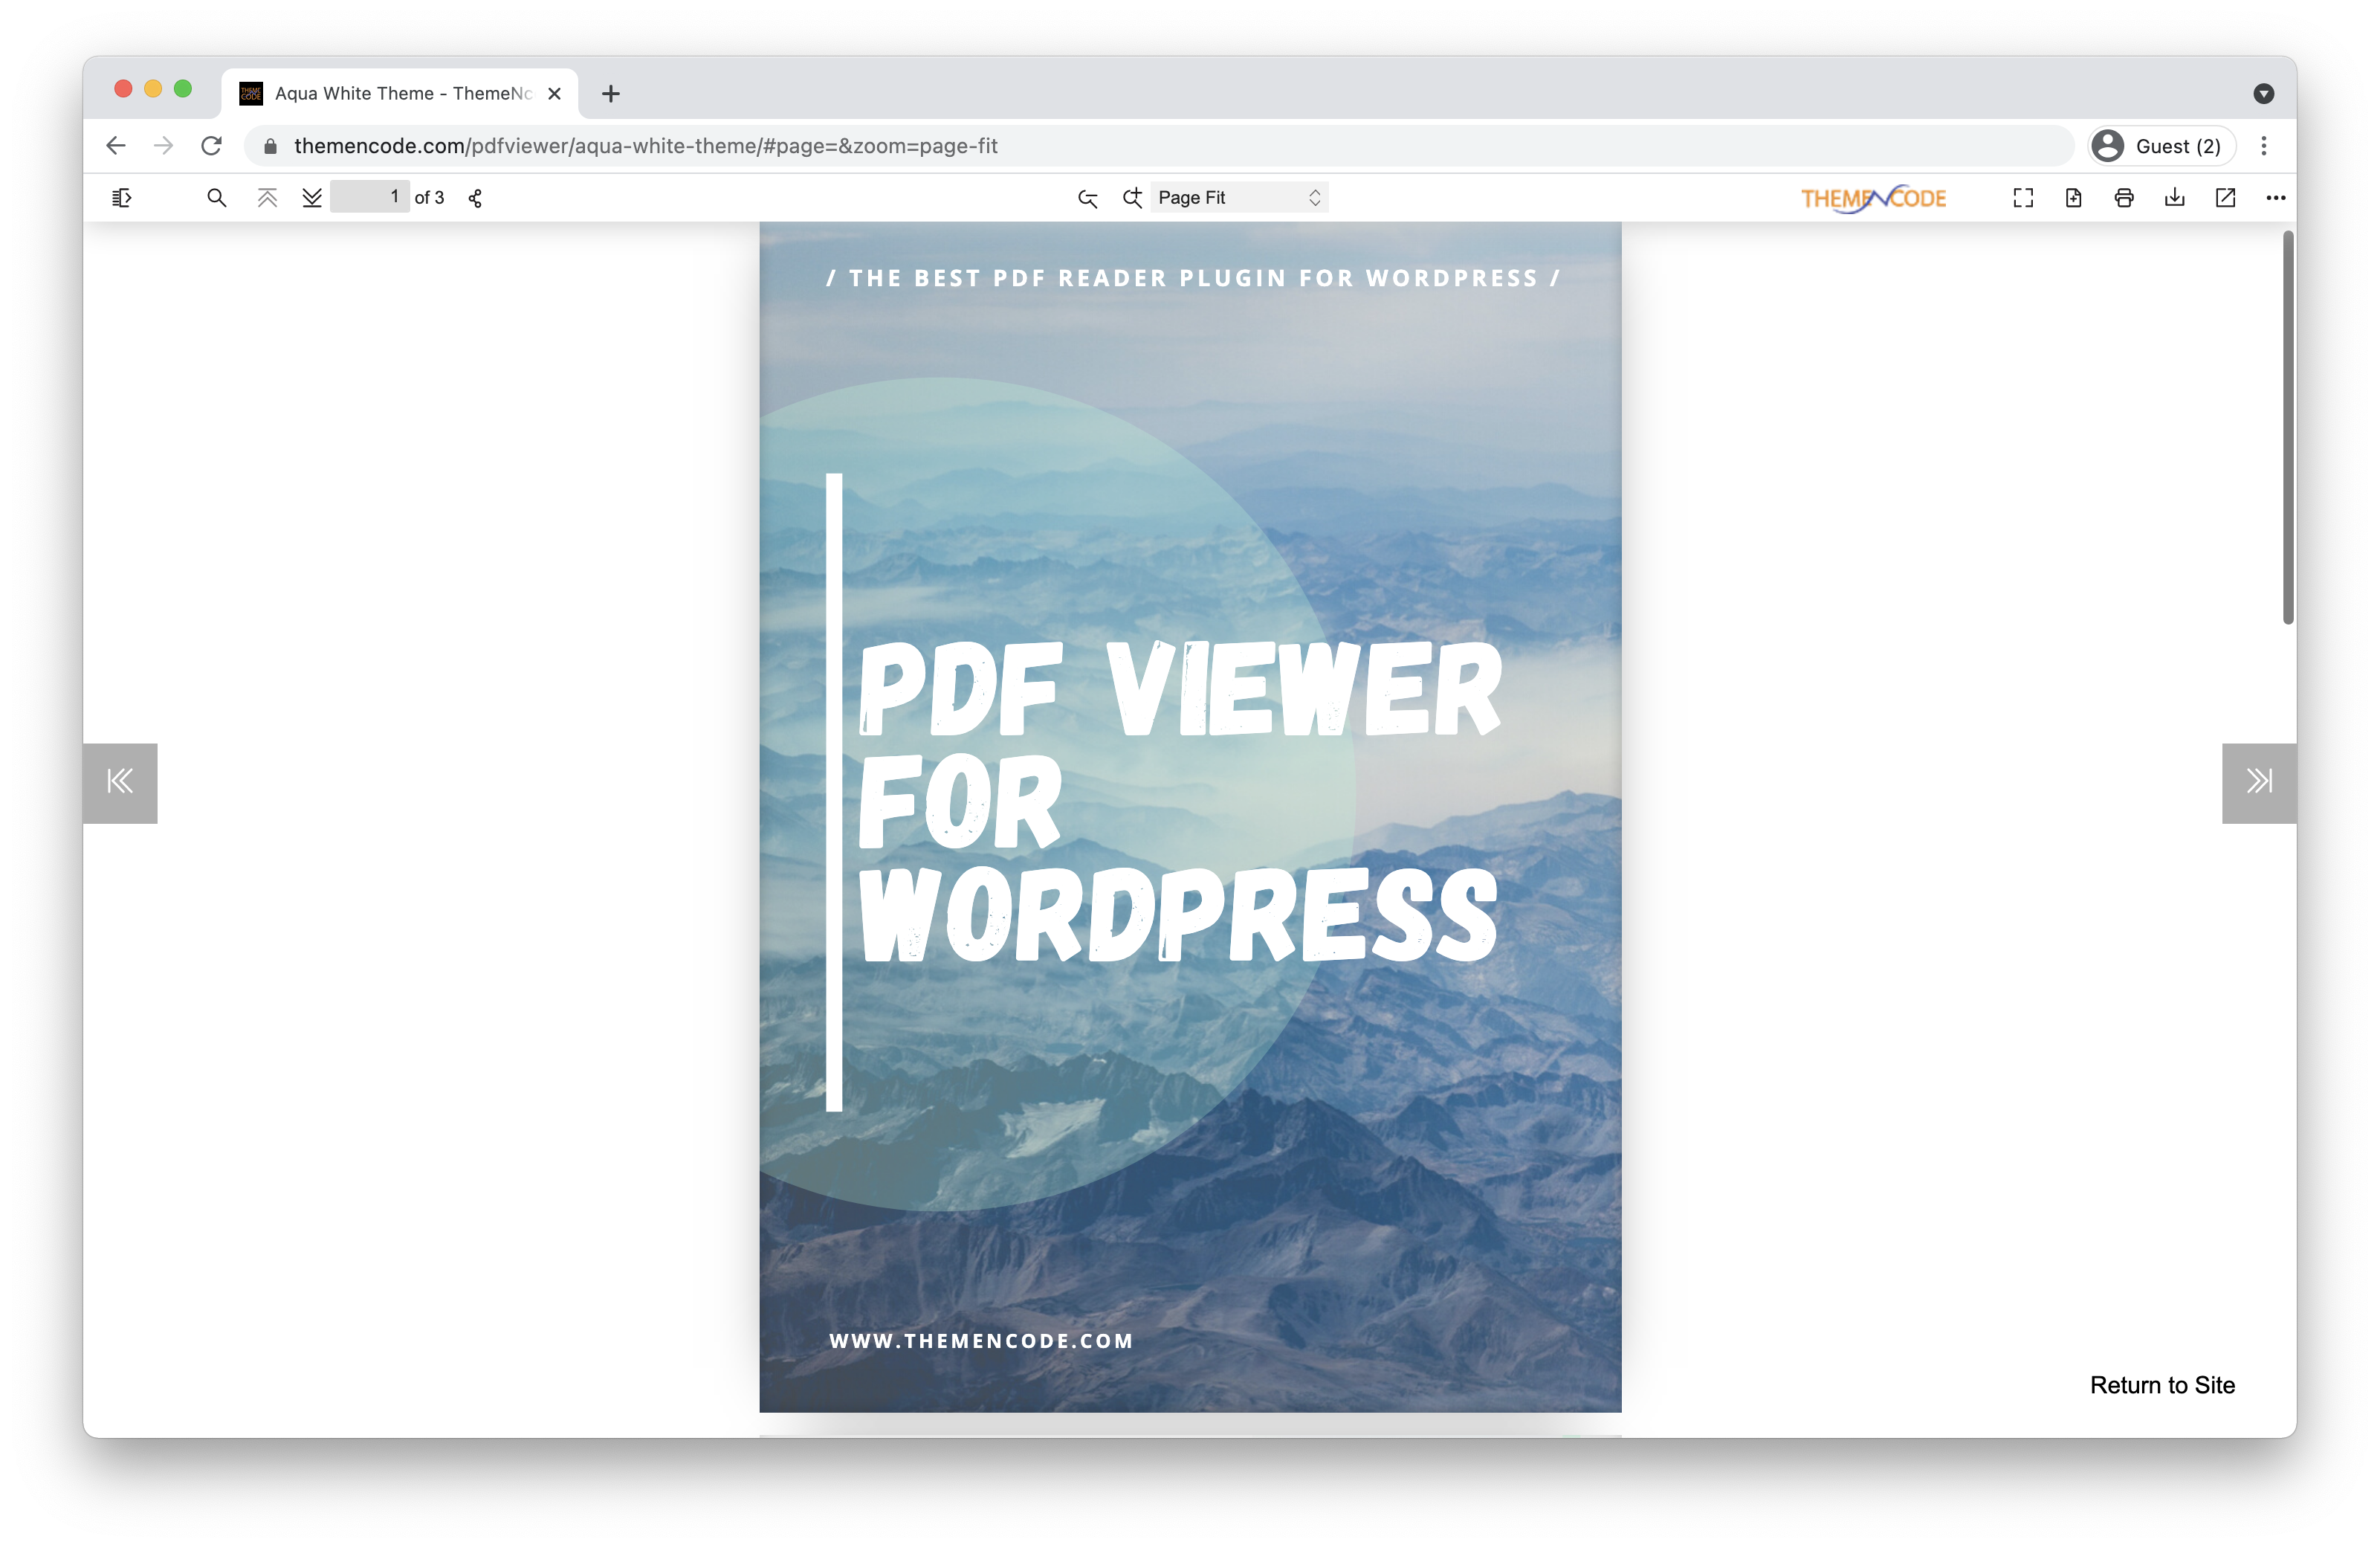 PDF viewer for WordPress 6